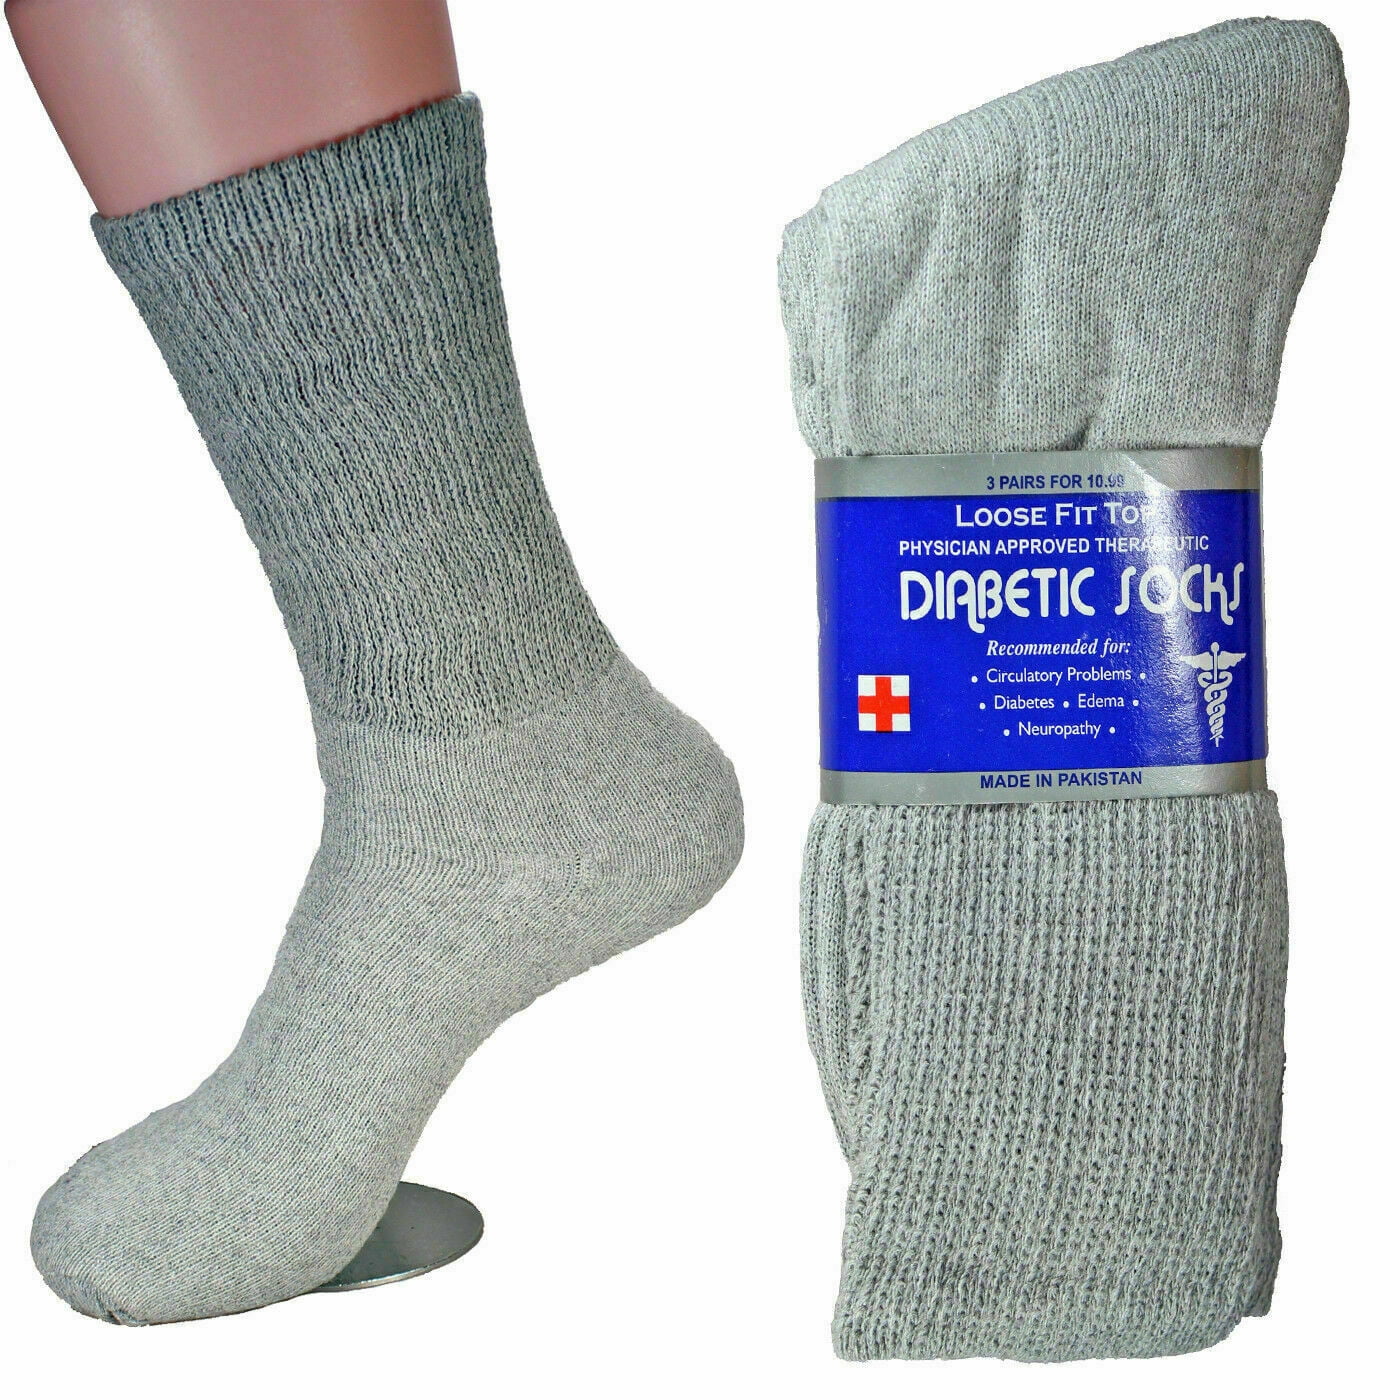 3,6,12 Pairs Diabetic CREW circulatory Socks Health Men's Cotton ALL SIZE